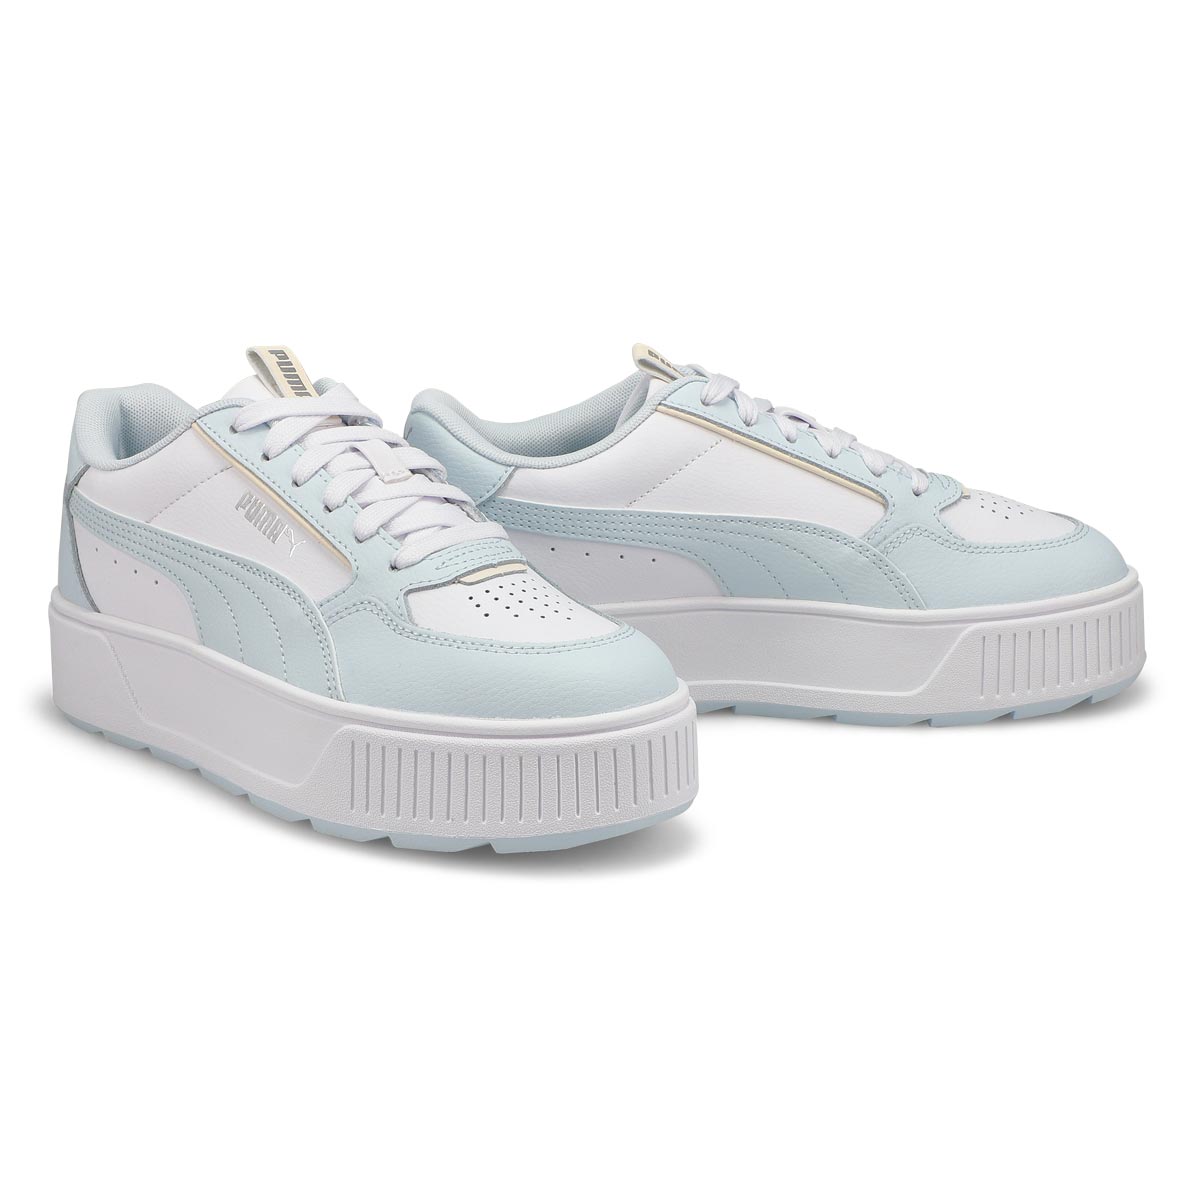 Ladies Karmen Rebelle Platform Sneaker- White/Dewdrop/Silver